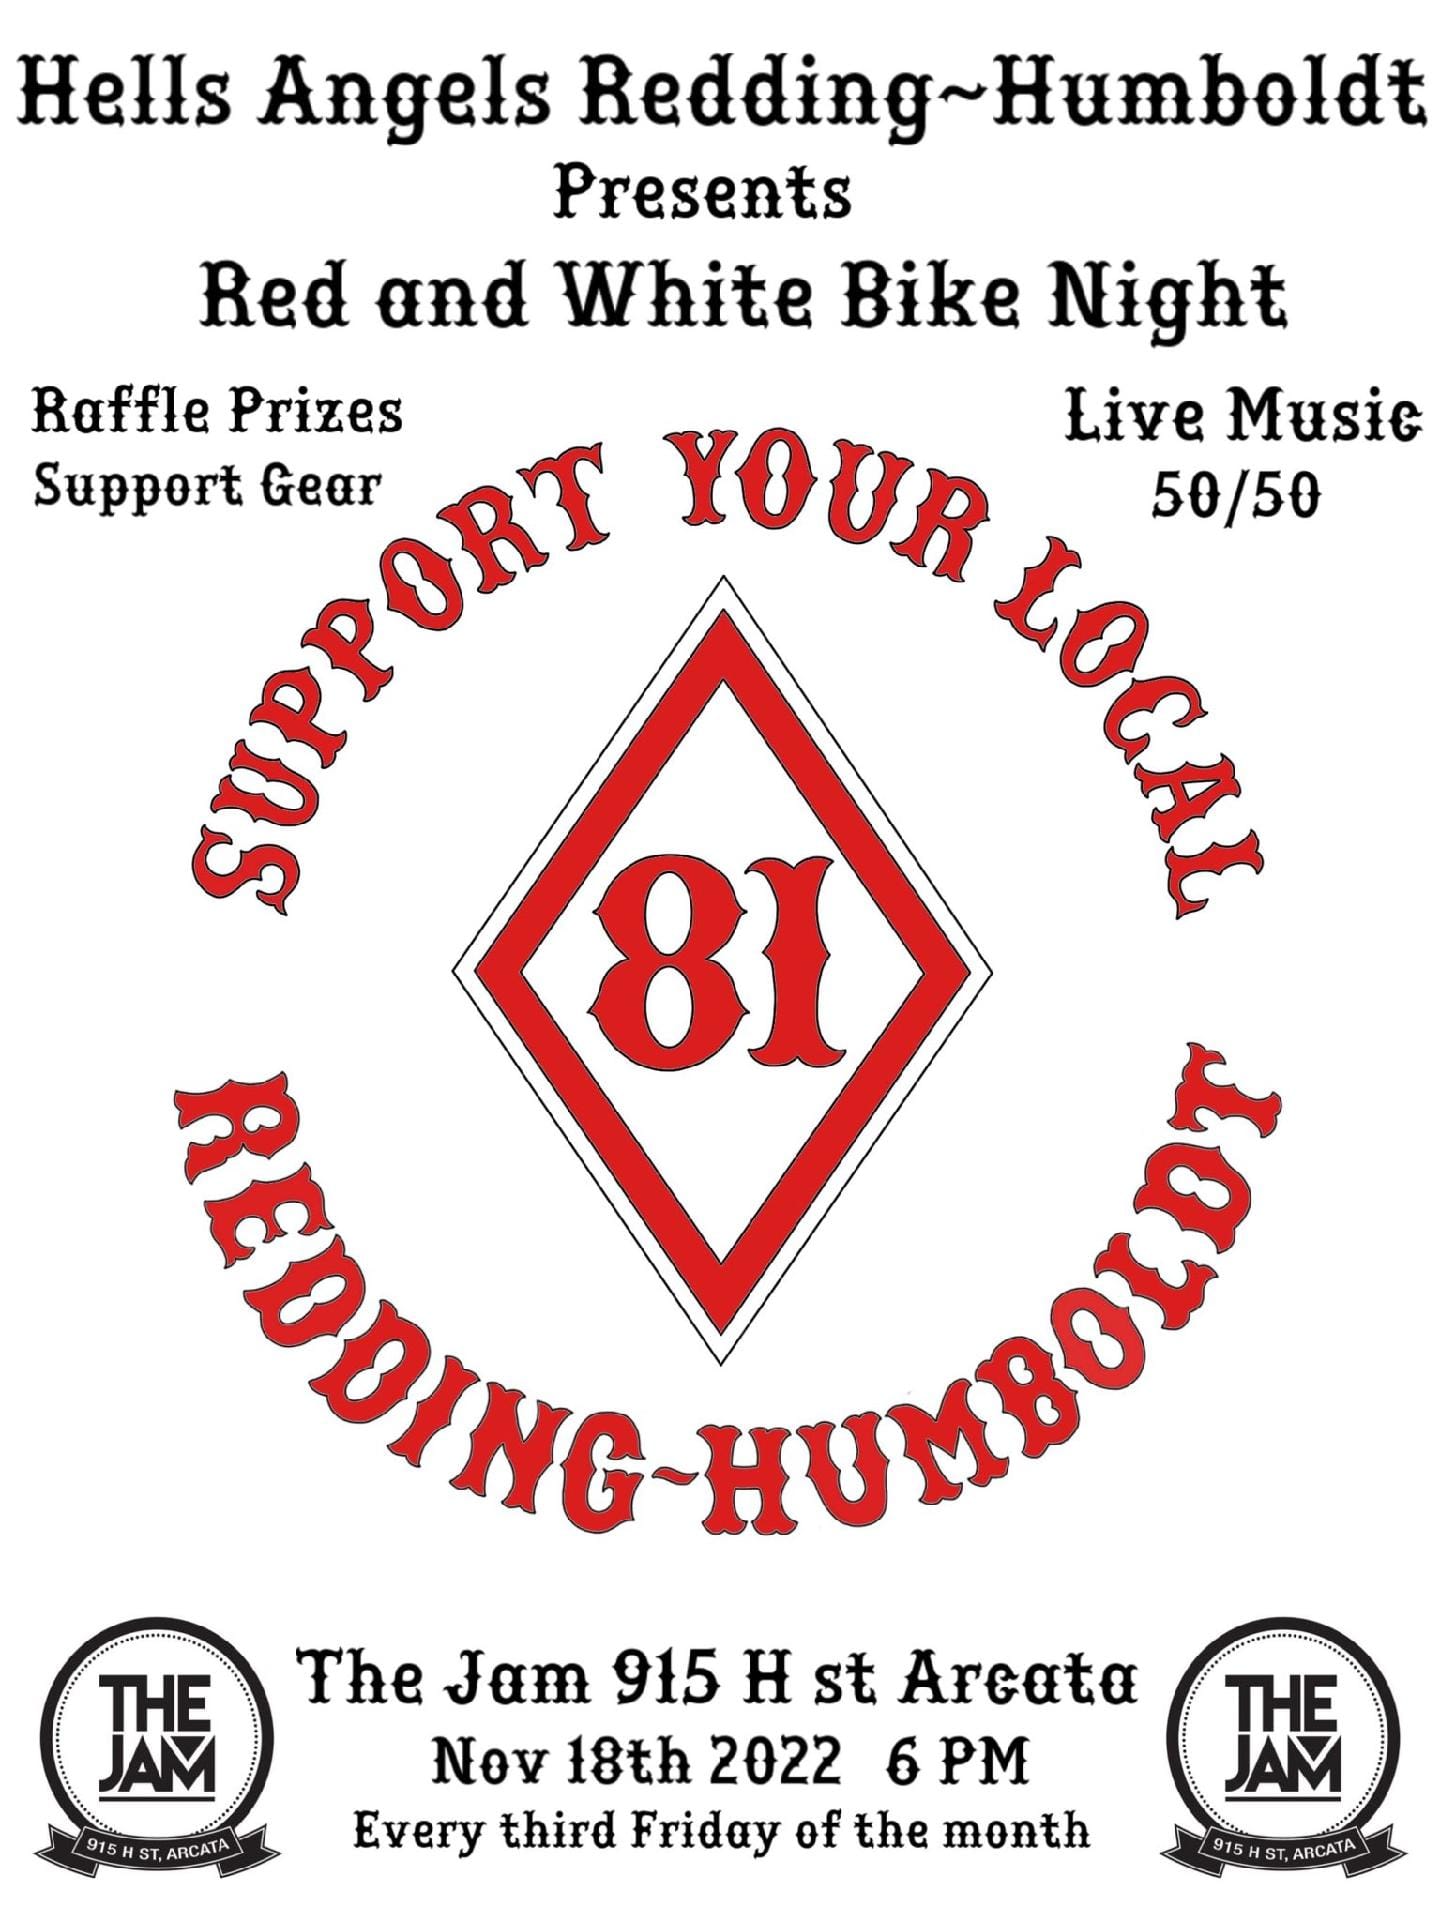 Hells Angels ReddingHumboldt Presents "Red and White Bike Night